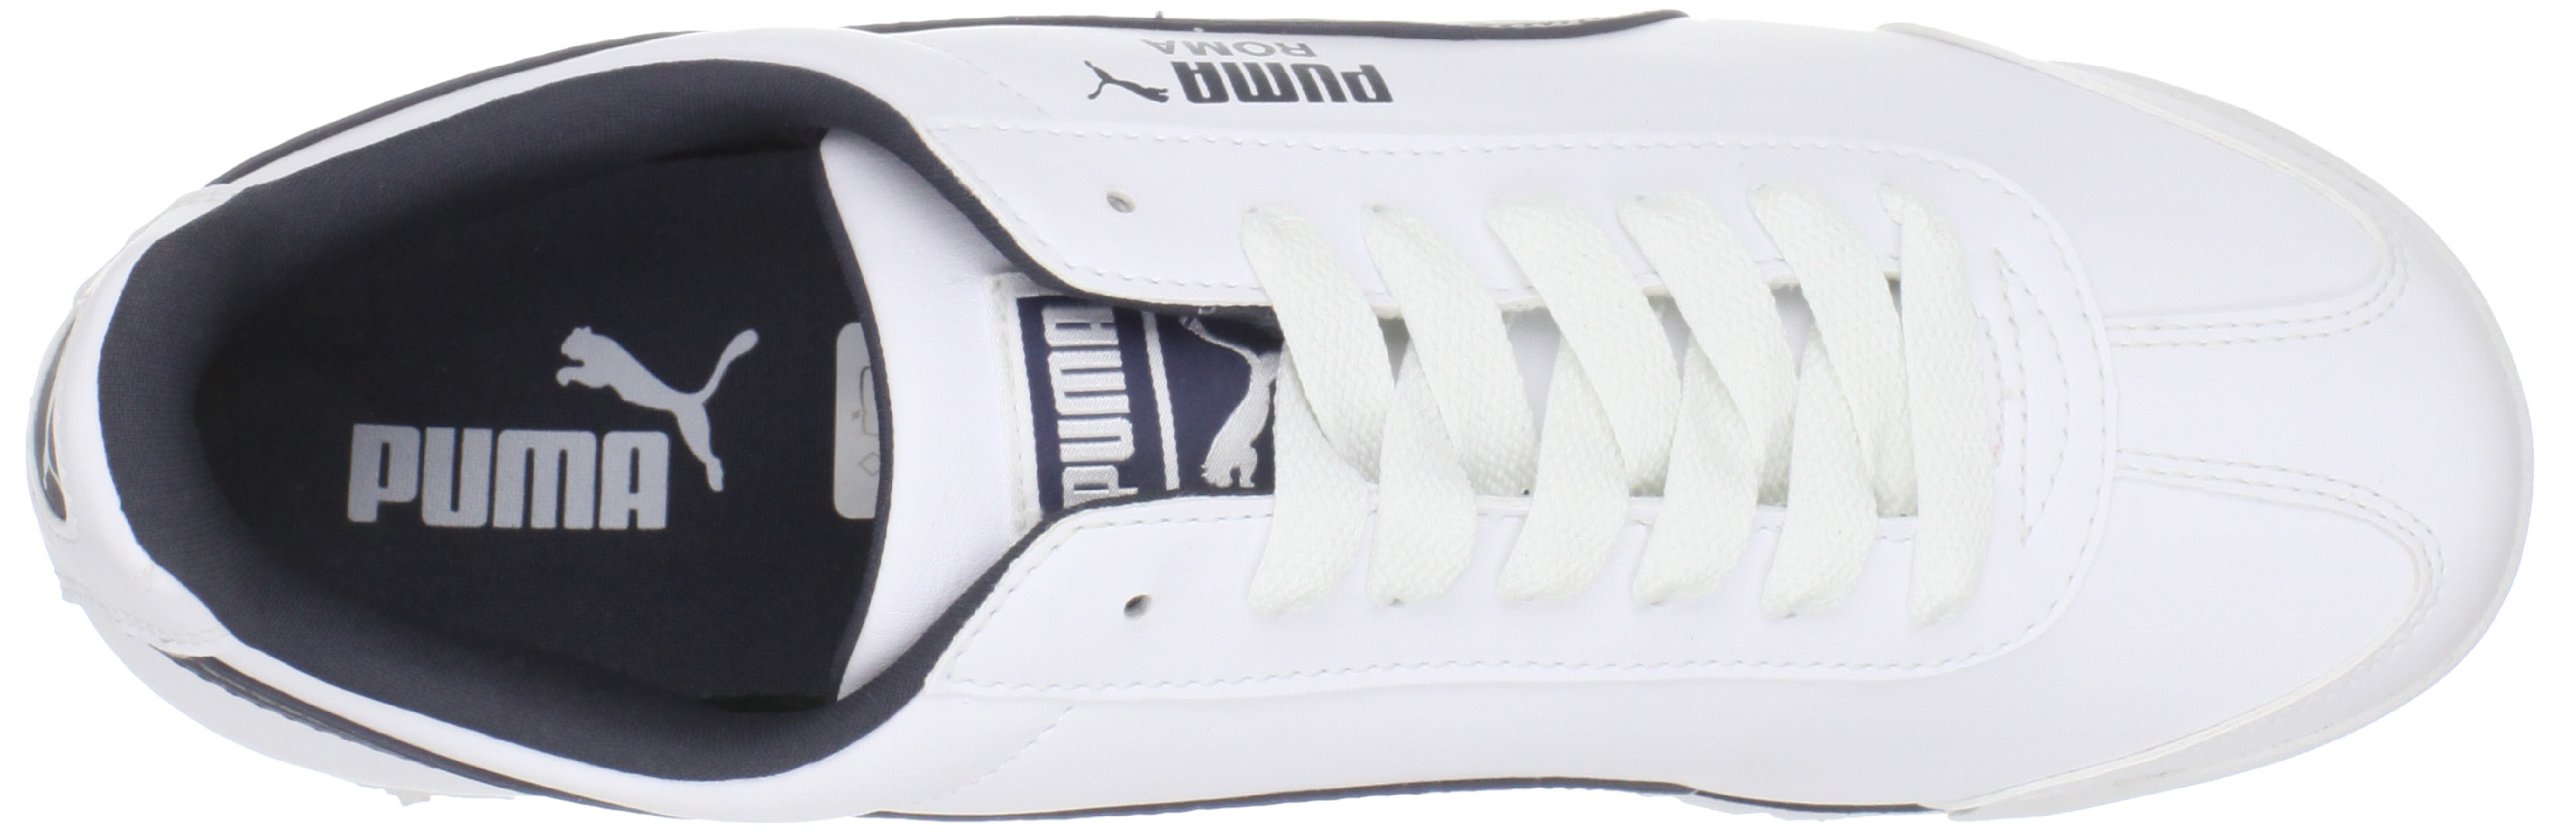 PUMA Men's Roma Basic Fashion Sneaker, White/New Navy (11 D(M) US) - image 4 of 7